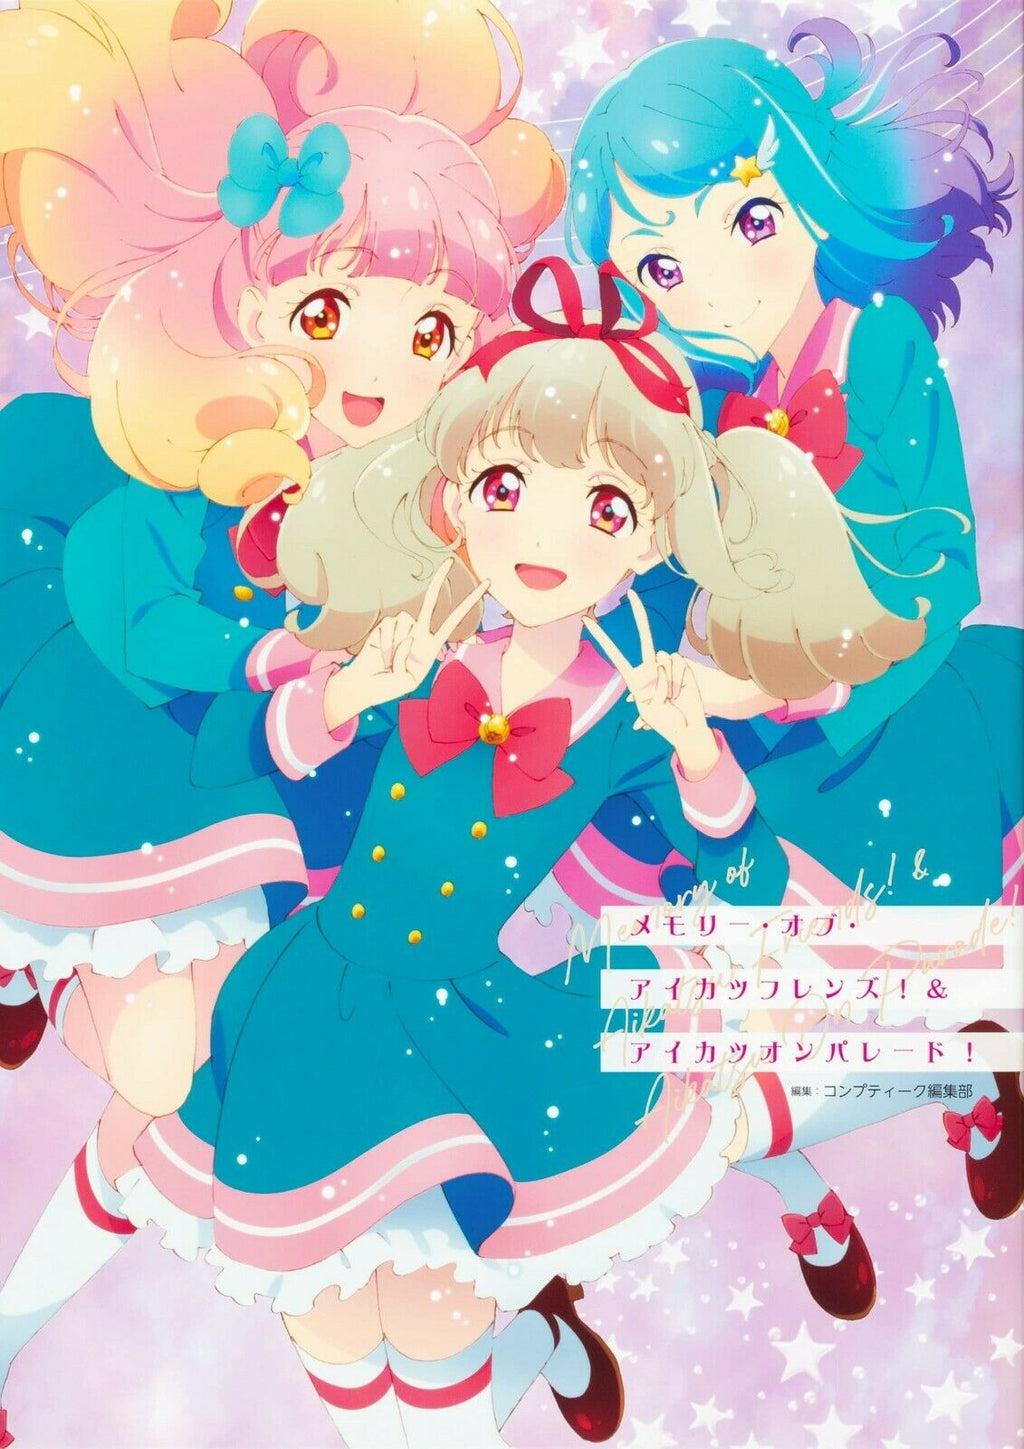 NEW' Memory of Aikatsu Friends! & Aikatsu on Parade! | JAPAN Anime Guide Book